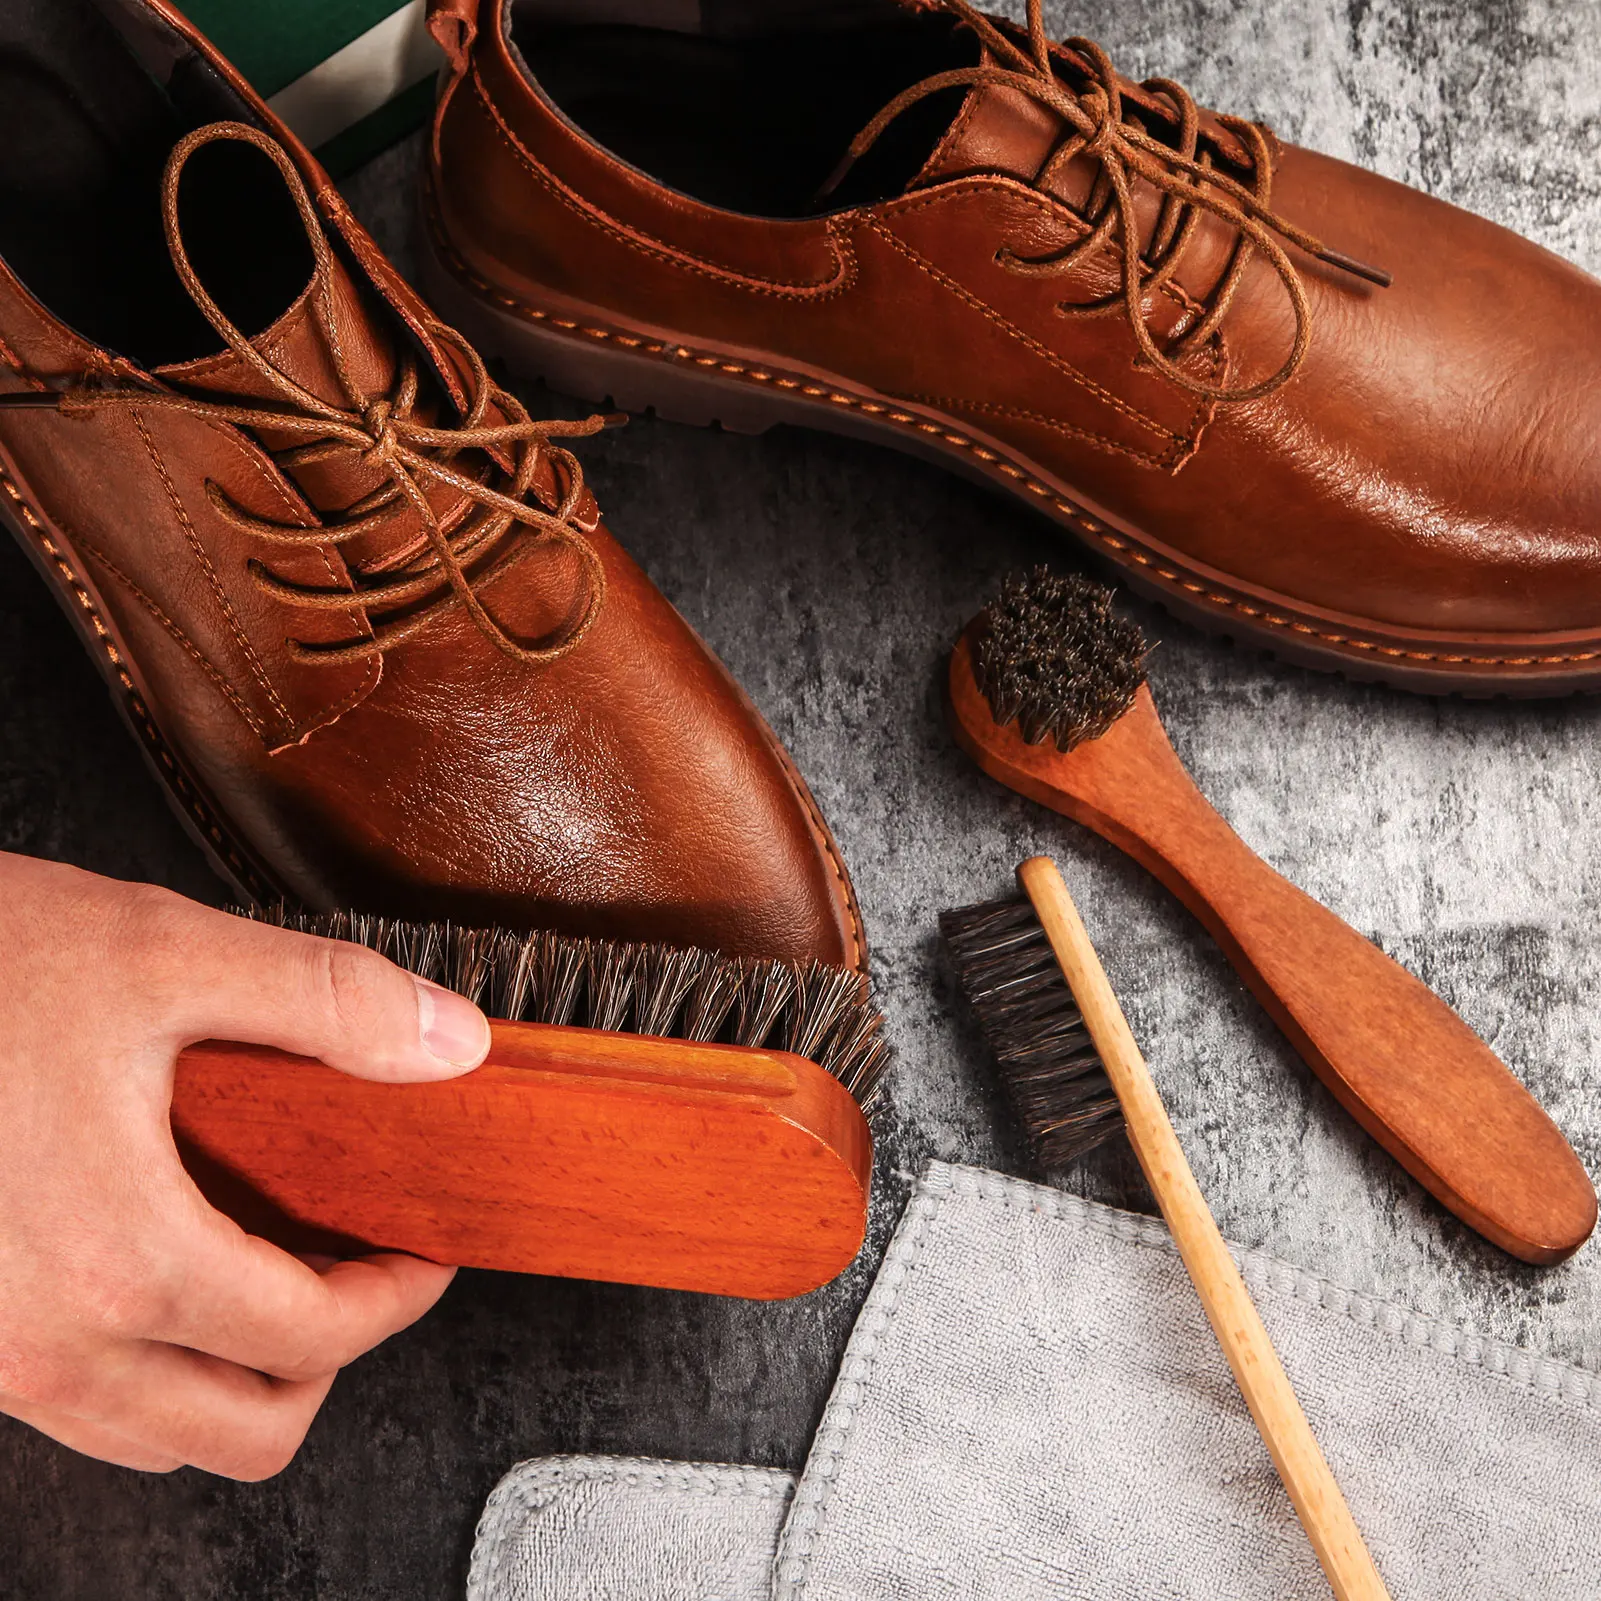 Horsehair Gloss shoe brush Kit Polishing Applicator Clean shoe Boot care brush Suede cleaning brush